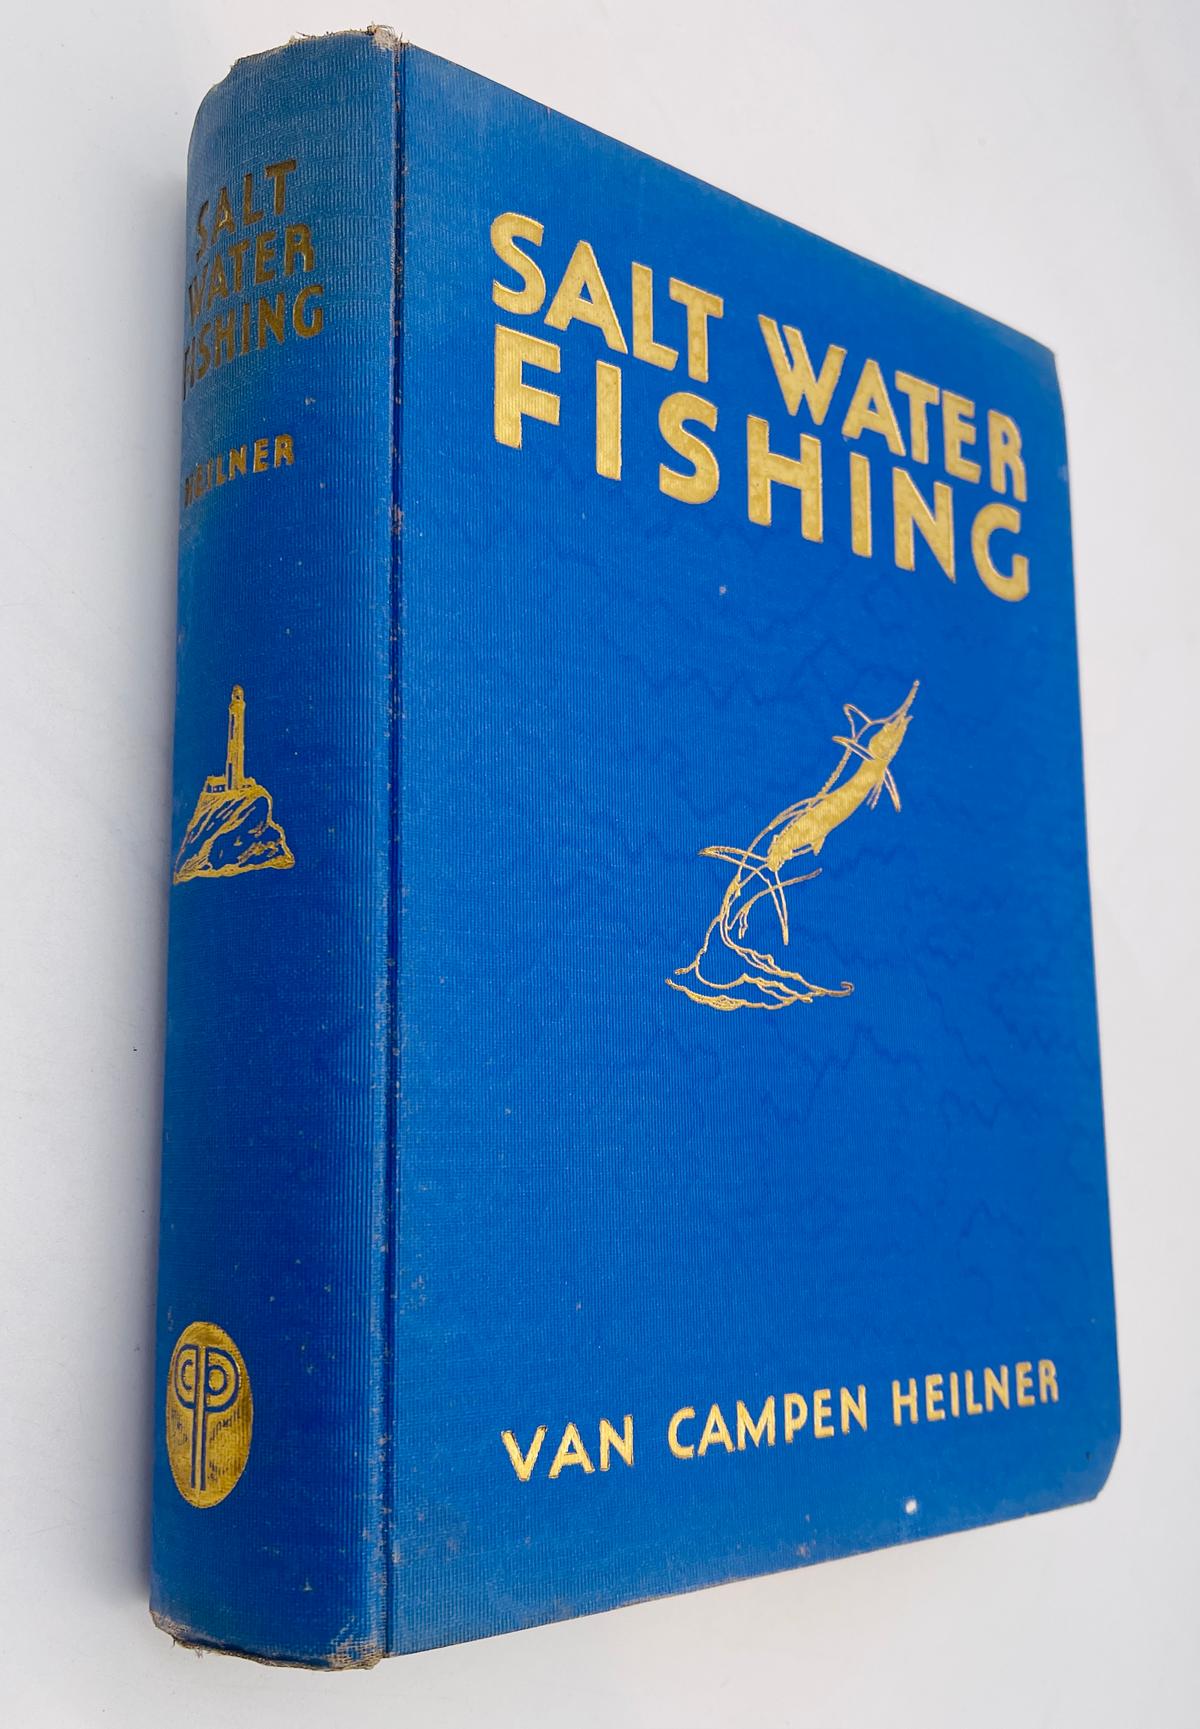 SALT WATER FISHING by Van Campen Heilner (1937)